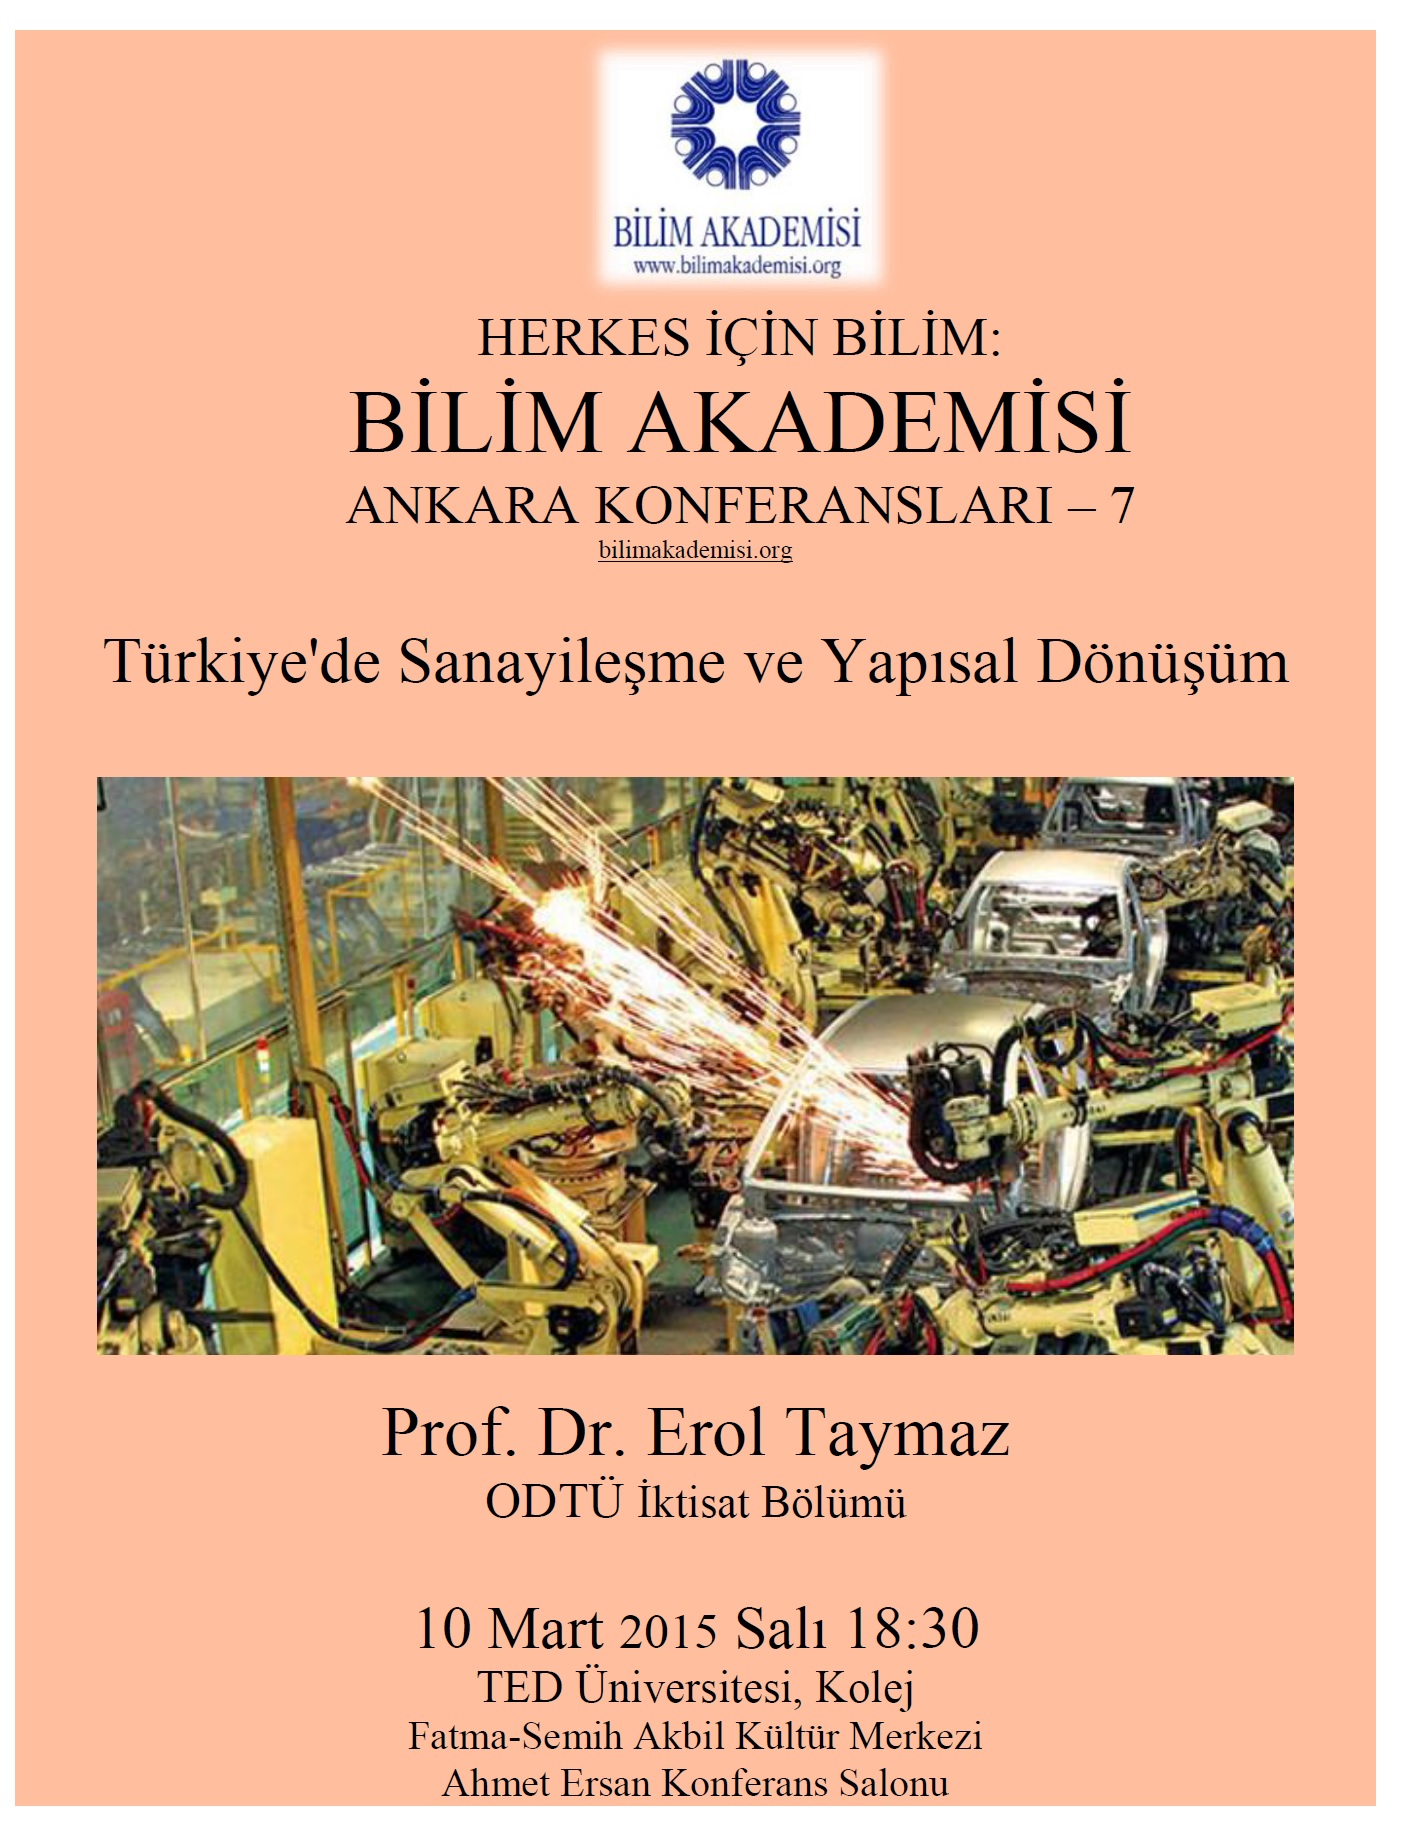 Industrialization and Structural Change in Turkey – Speaker: Erol Taymaz